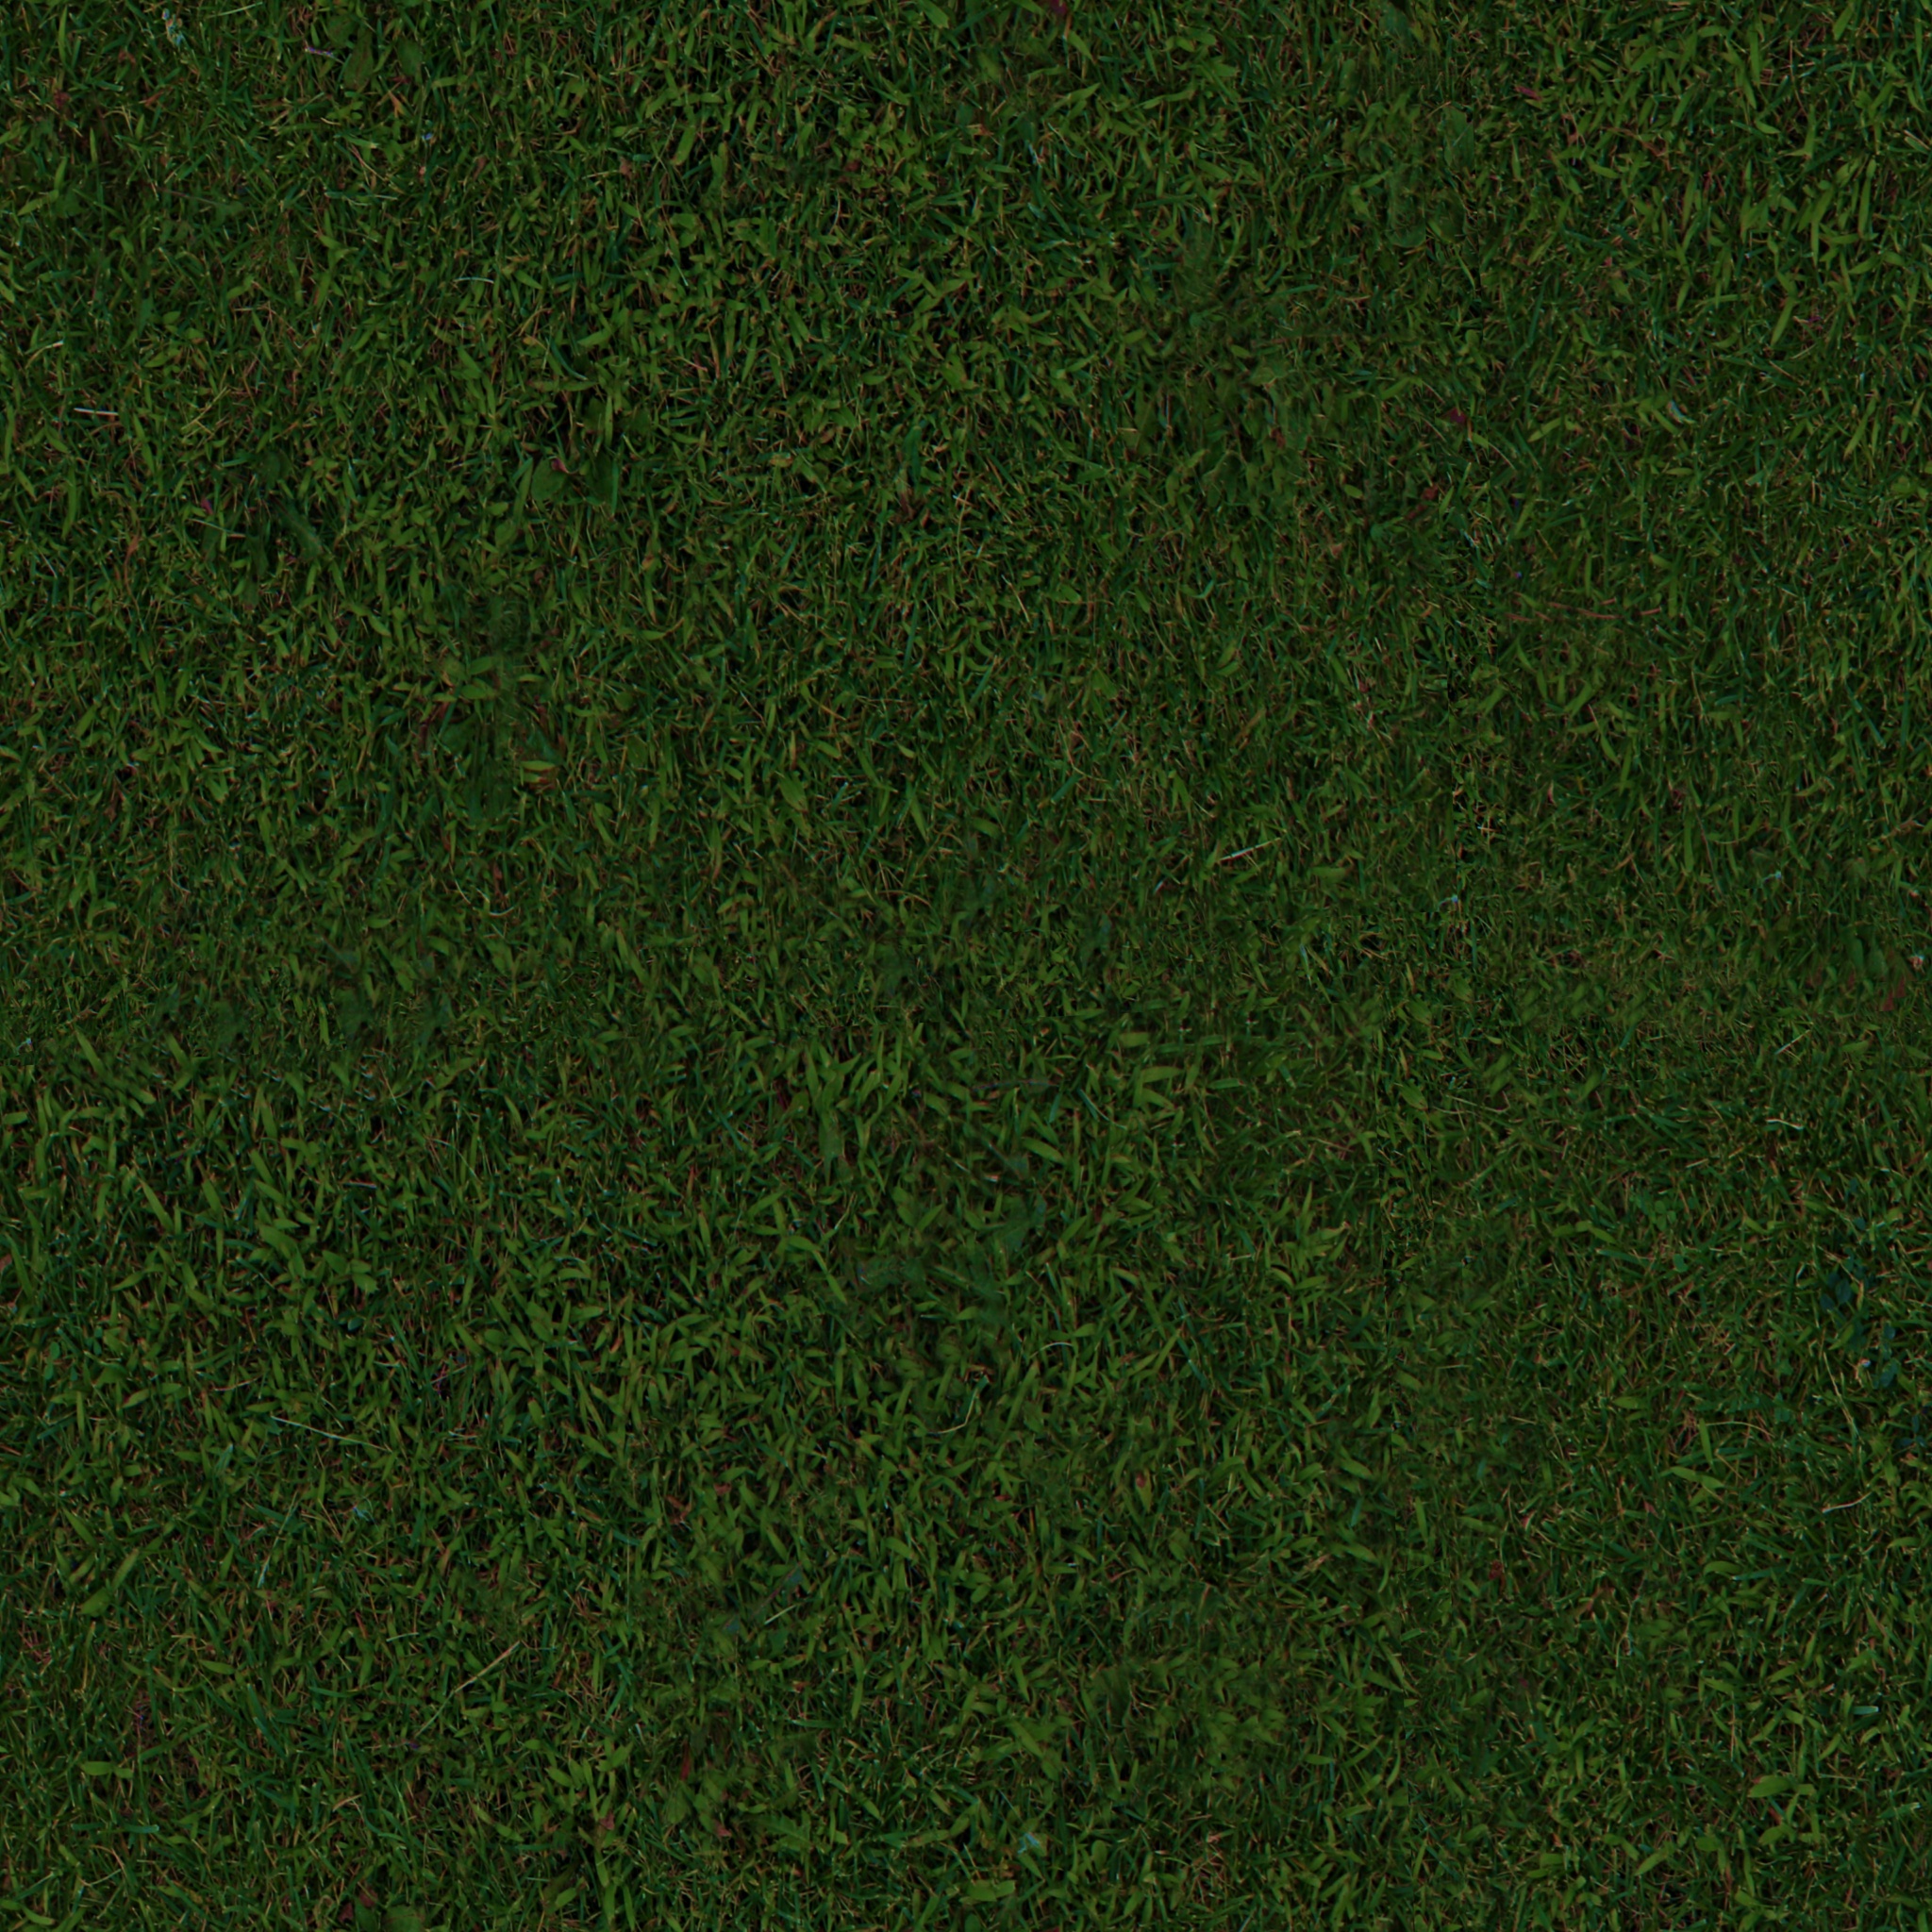 Grass texture seamless - coffeerety